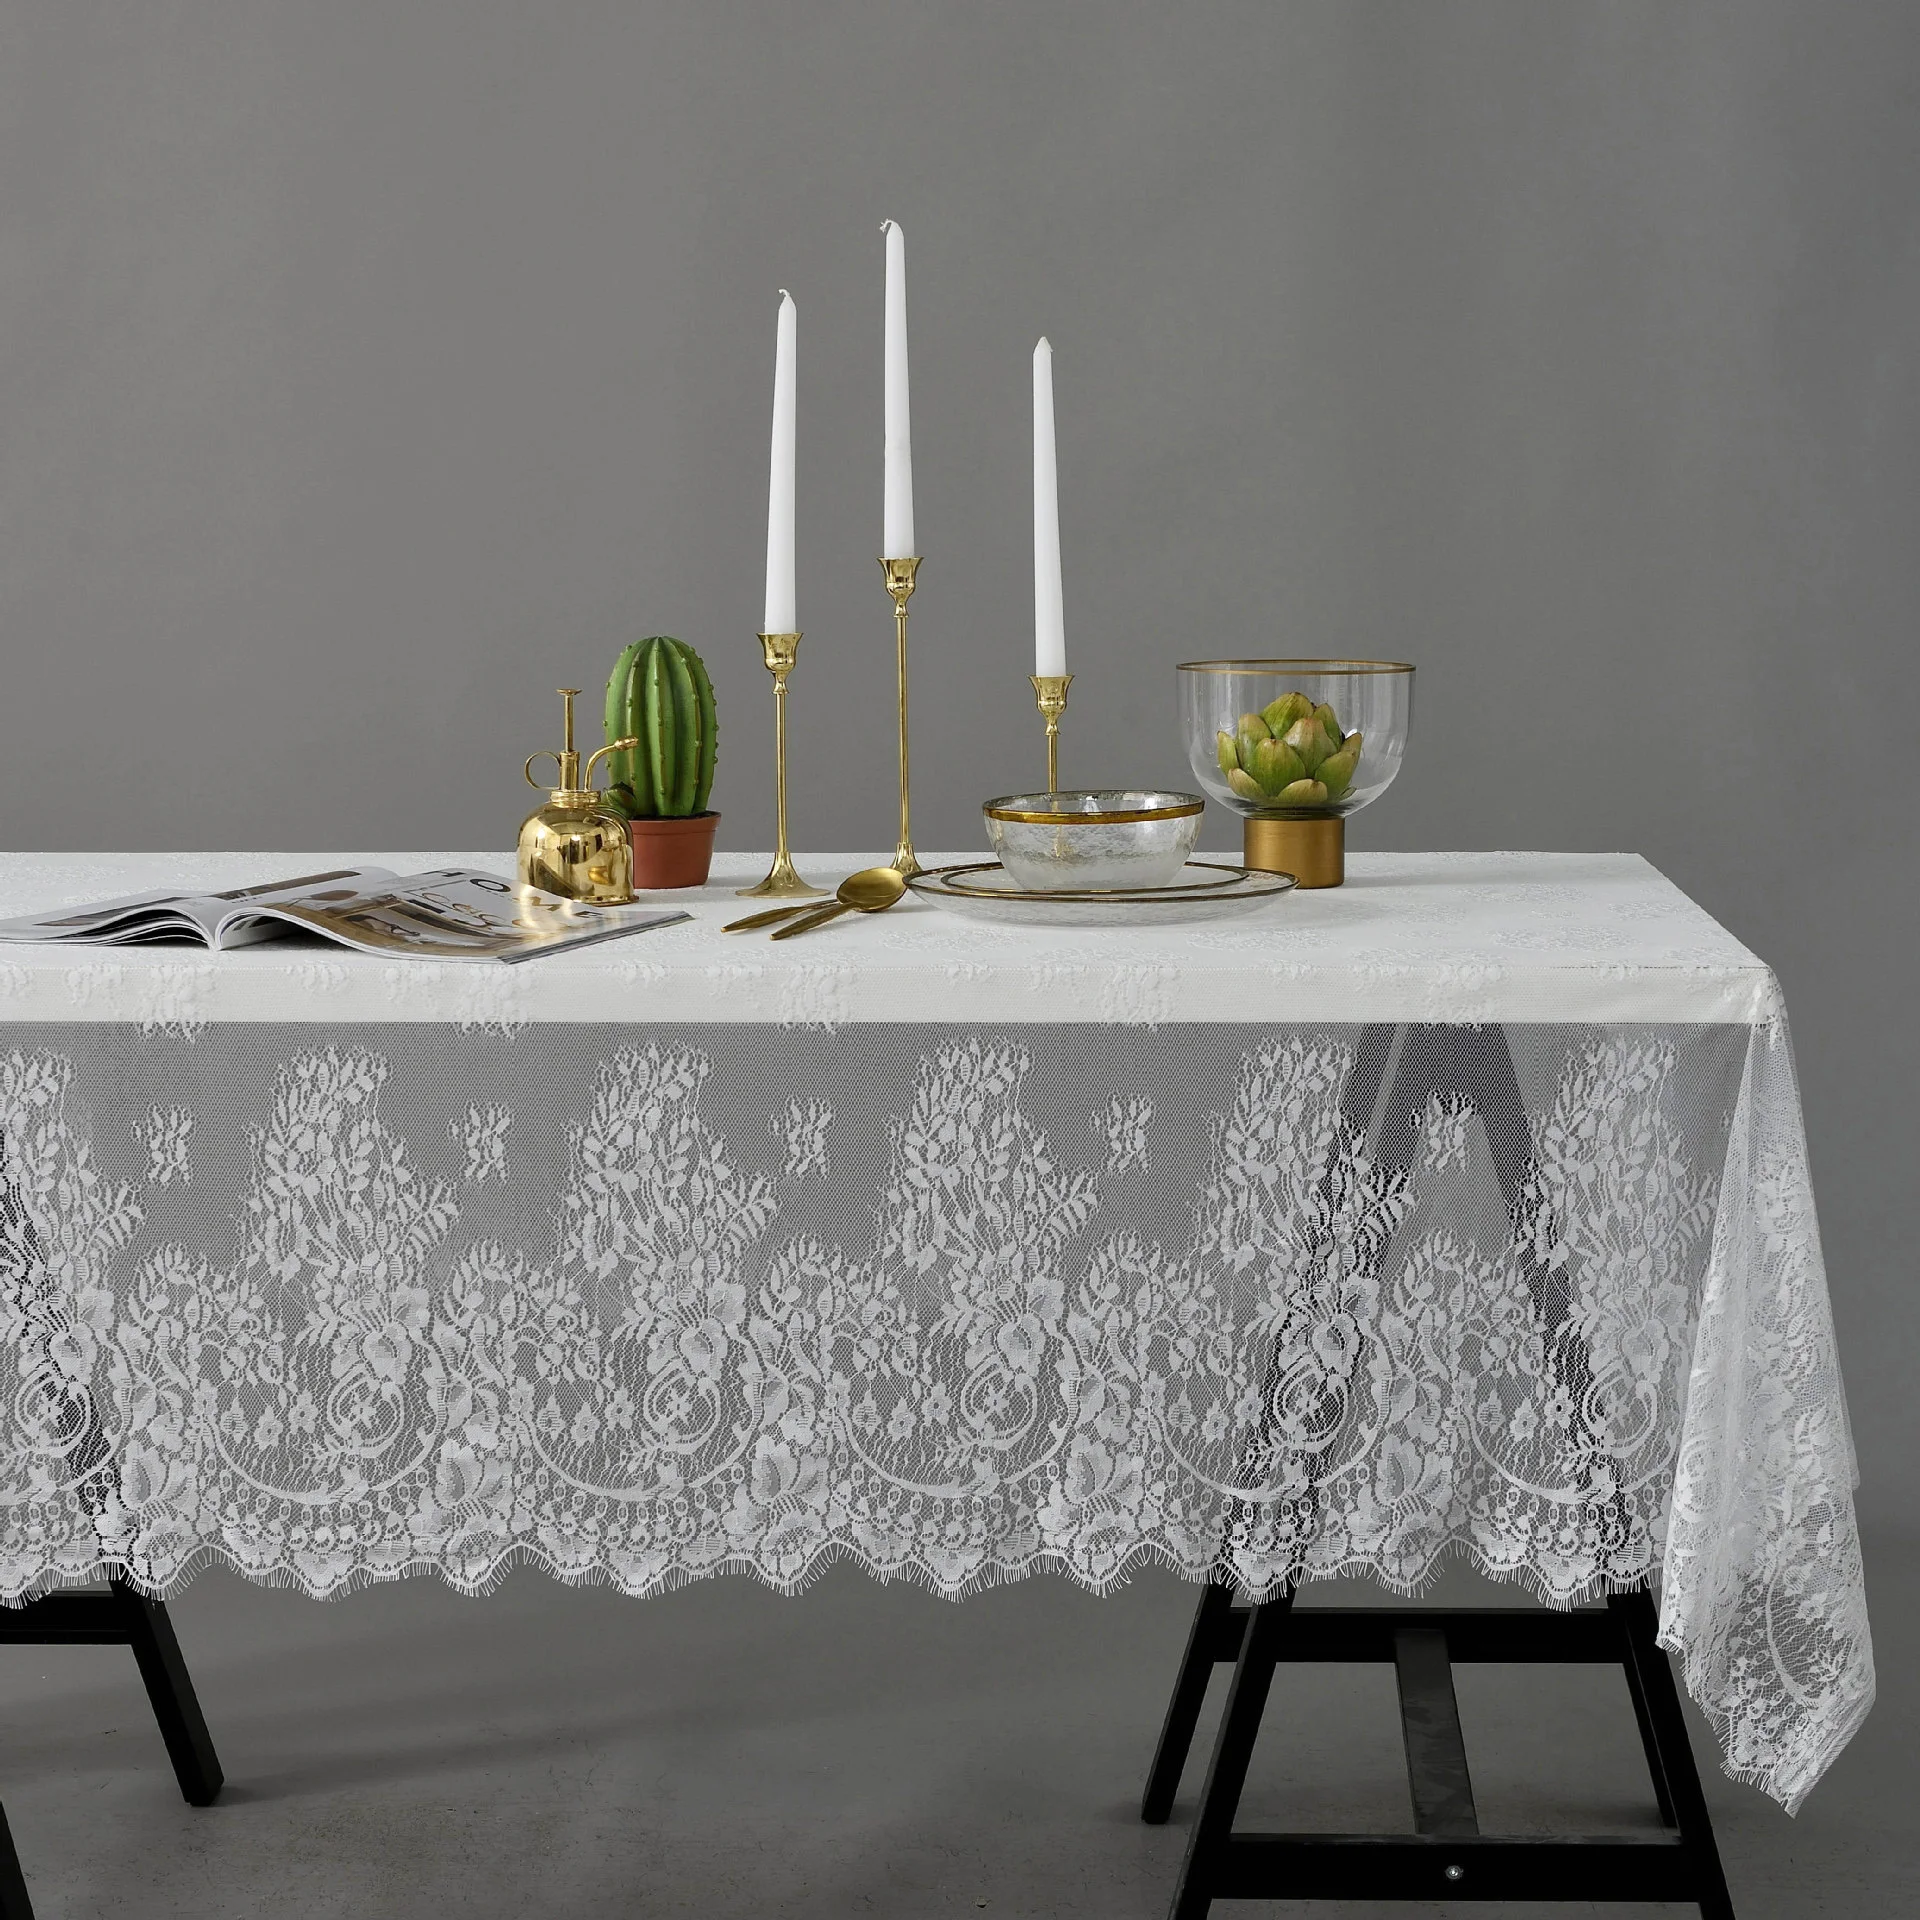 

Elegant Lace Table Cloth White Black Romantic Wedding Tablecloth Decor Cafe Table Decoration Cover S M L XL